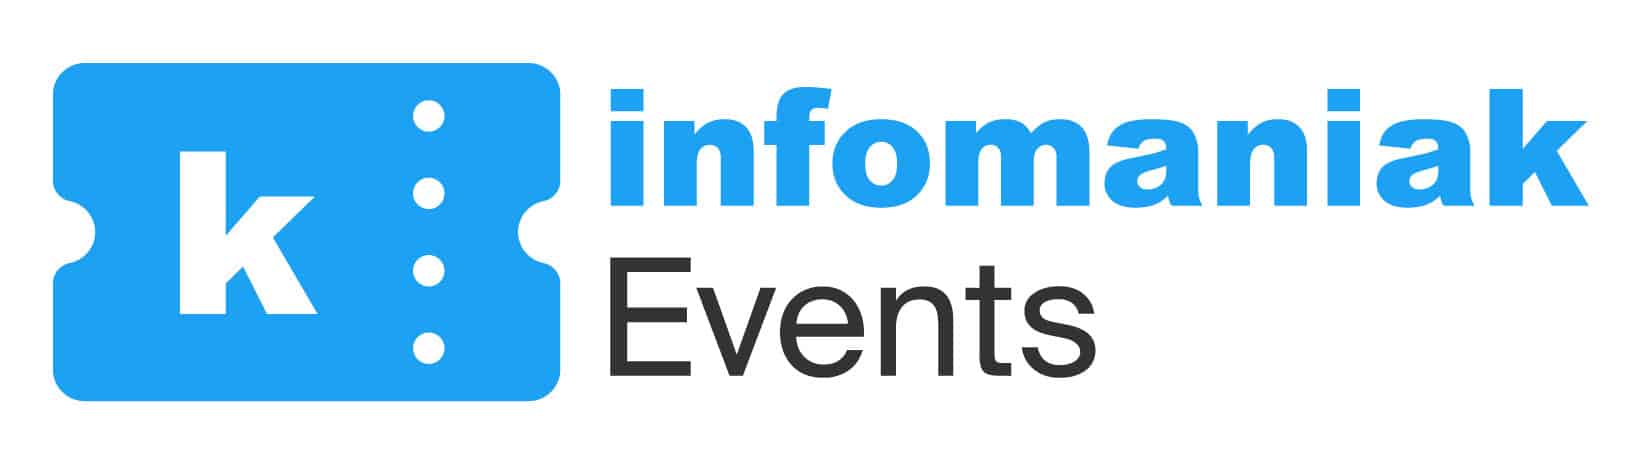 Infomaniak Events